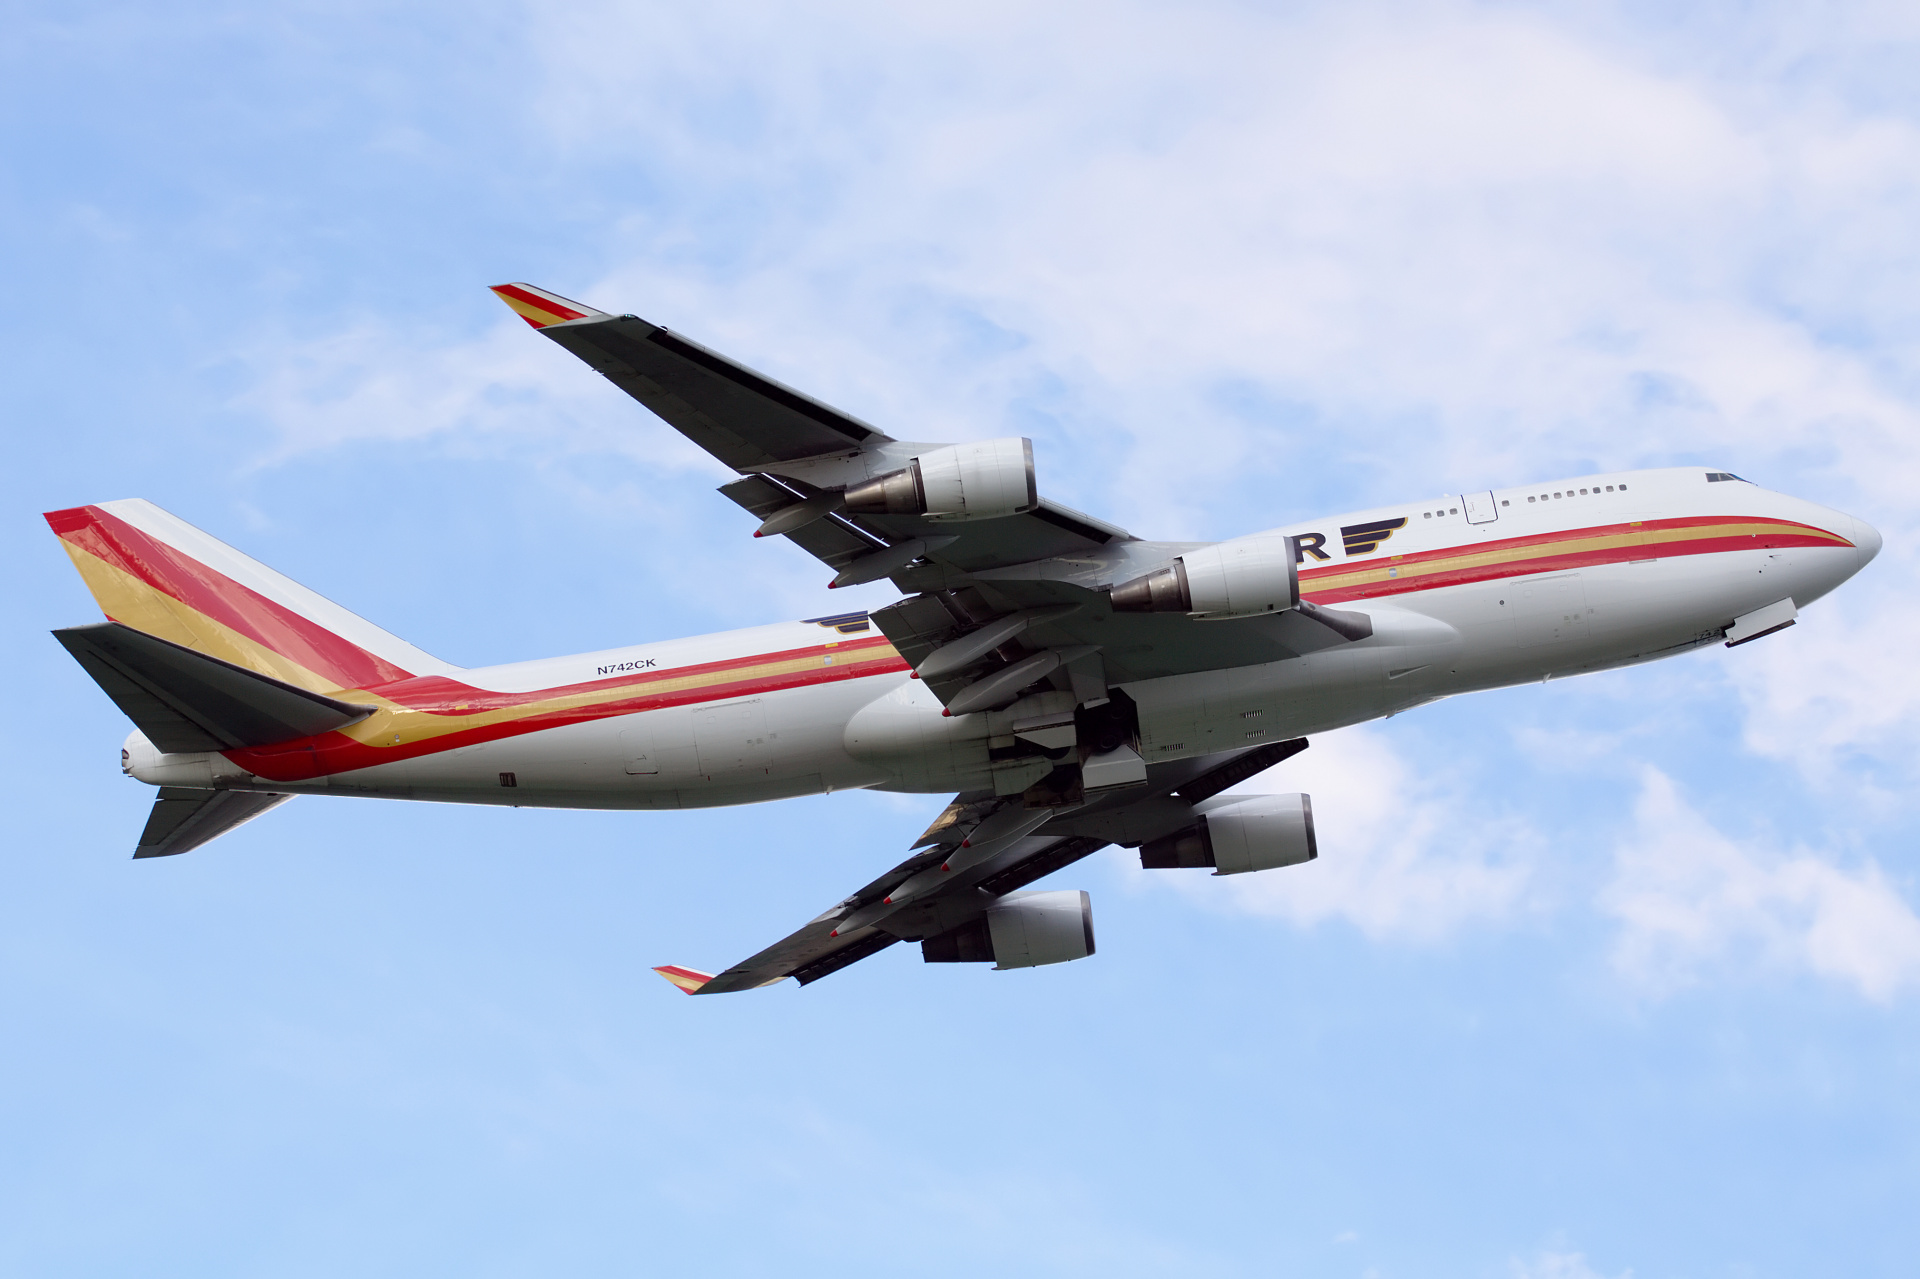 BCF, N742CK (Aircraft » EPWA Spotting » Boeing 747-400F » Kalitta Air)